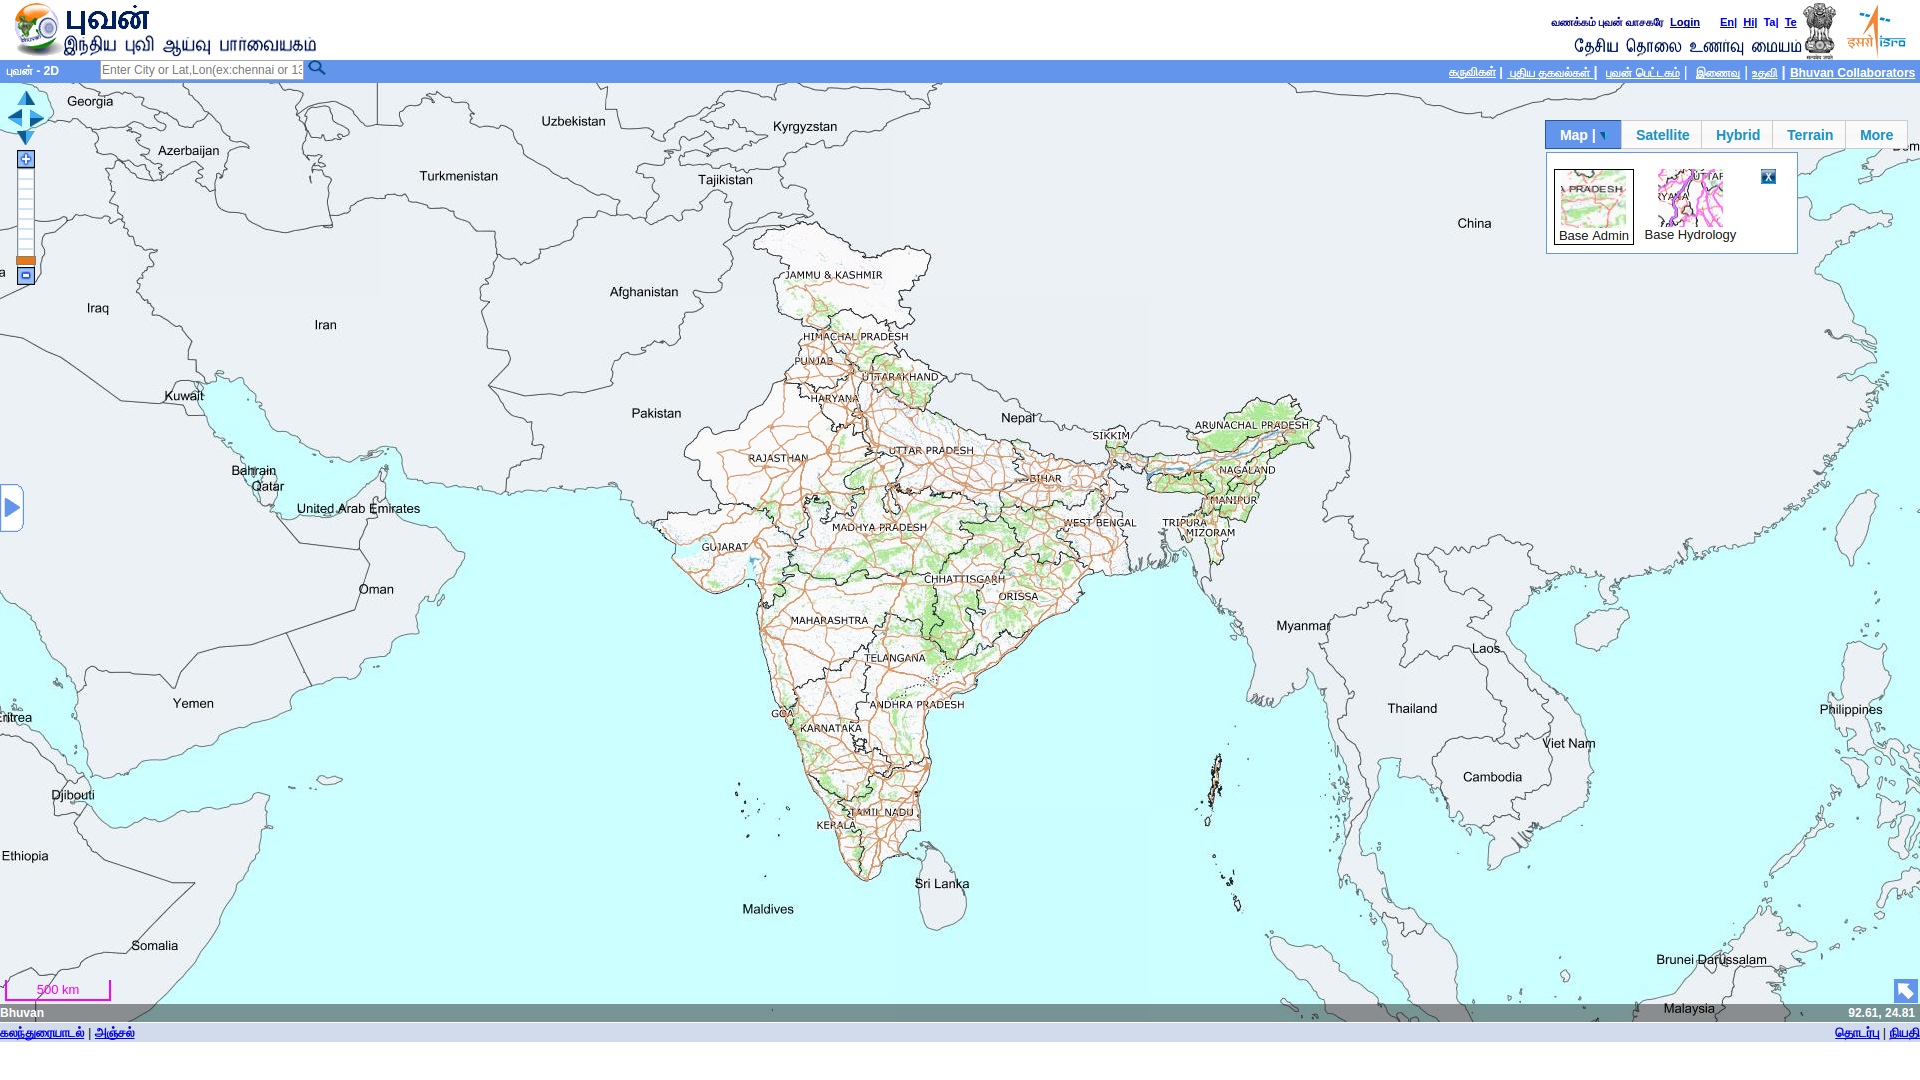 Bhuvan map in Tamil interface.